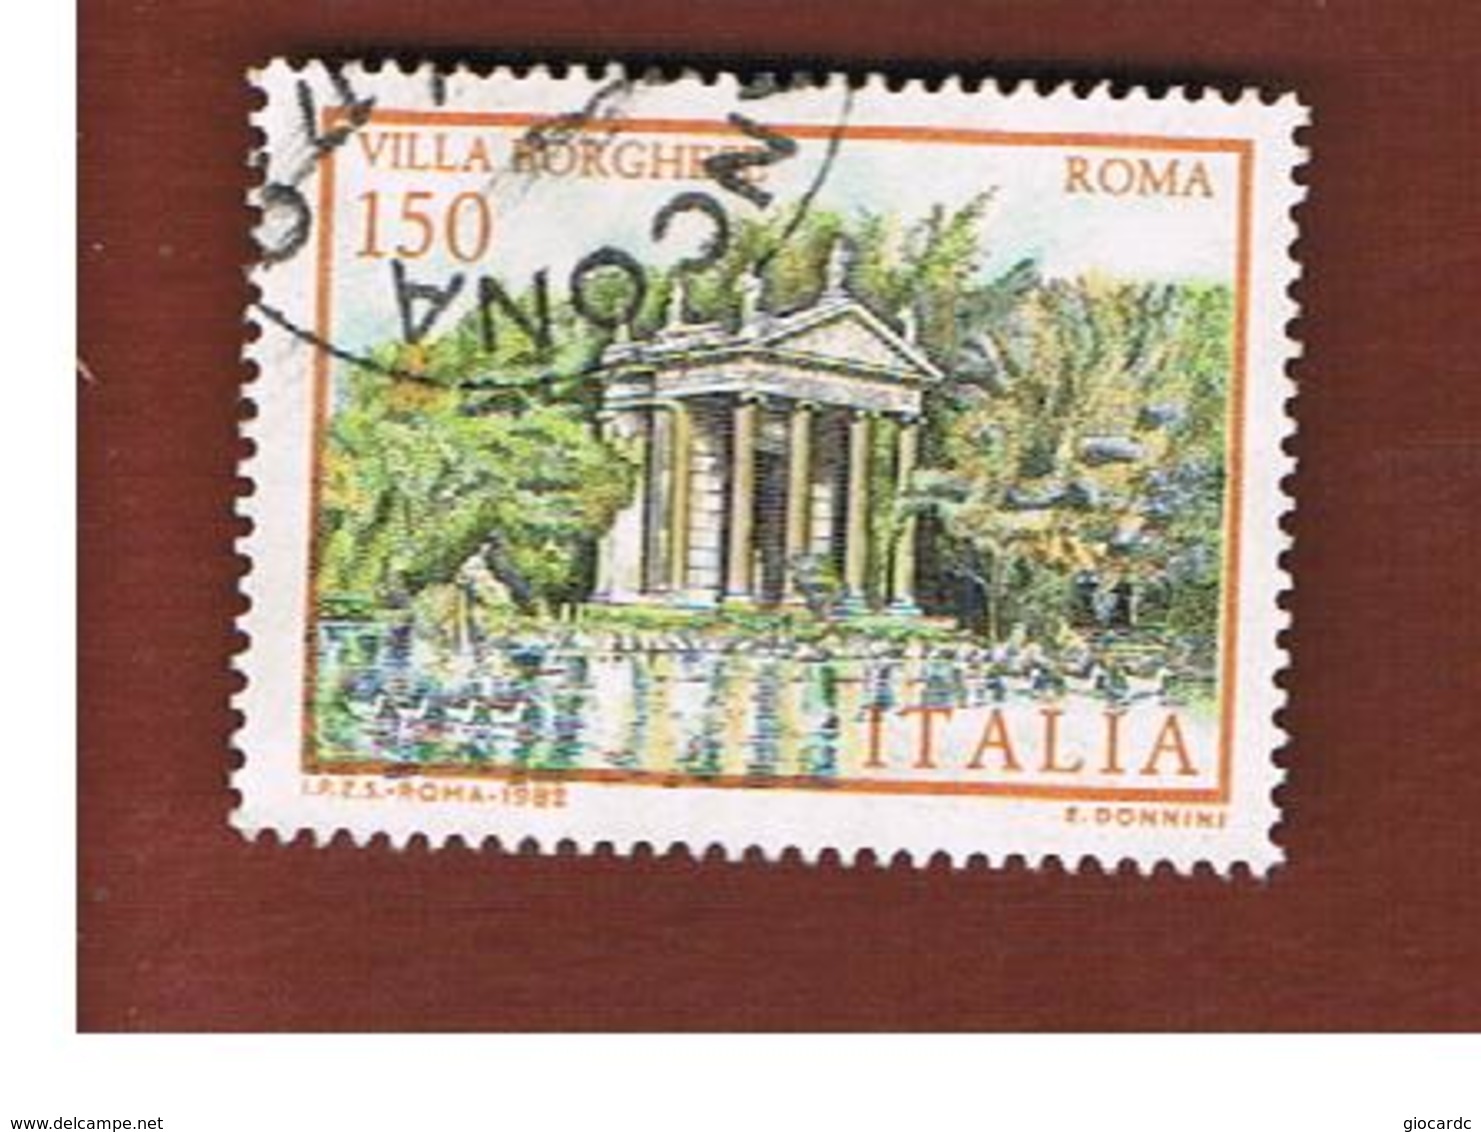 ITALIA REPUBBLICA  - SASS. 1610.1611  -      1982  VILLE D' ITALIA: D' ESTE, BORGHESE        -      USATO - 1981-90: Oblitérés